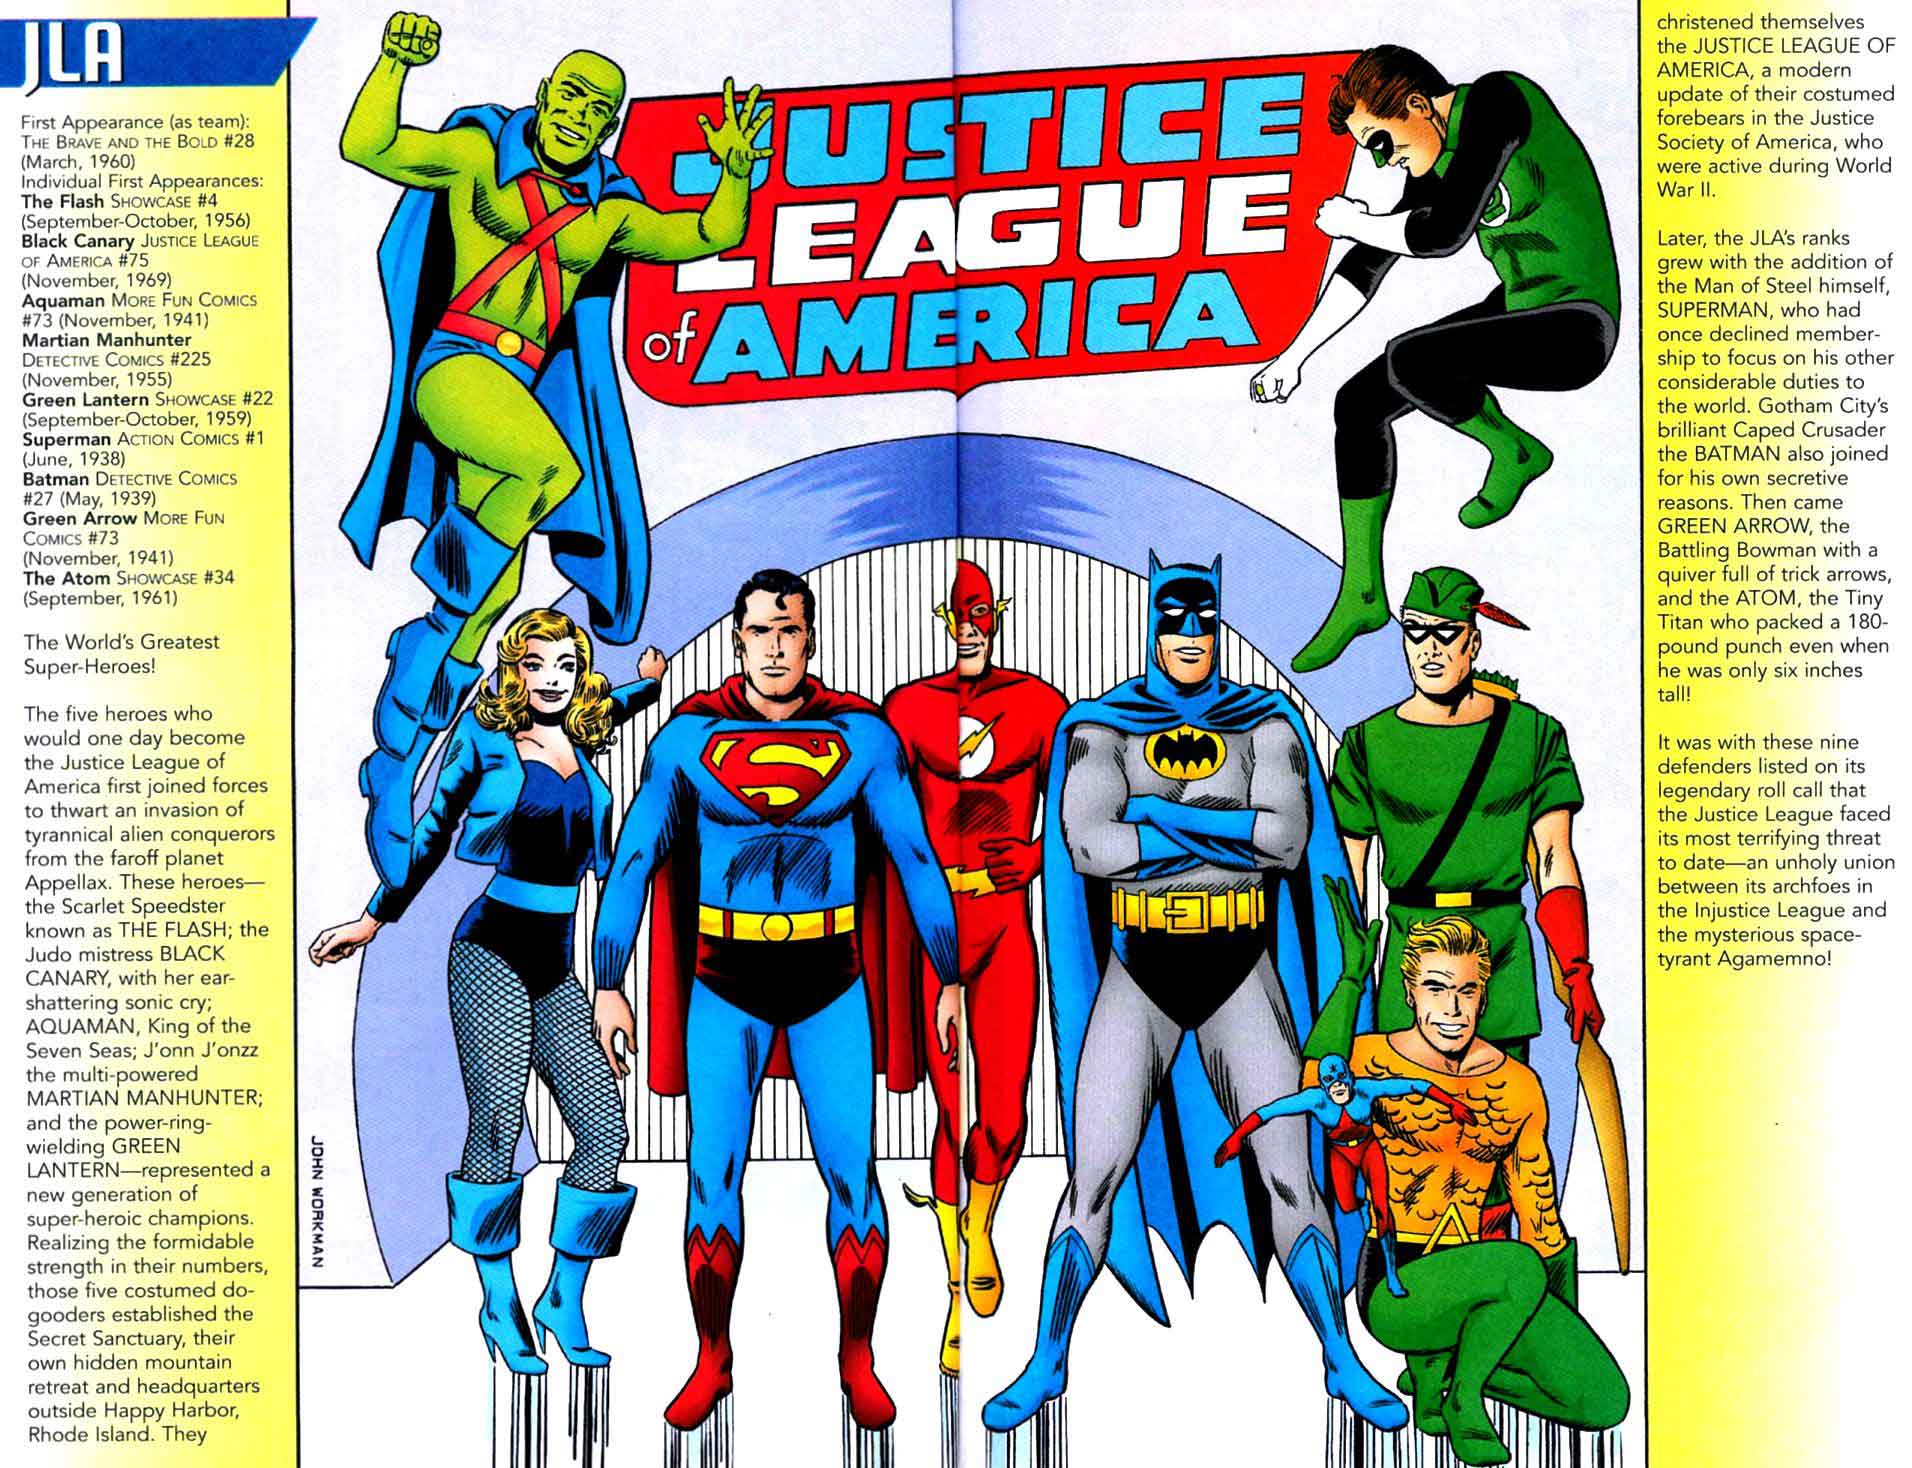 Justice League of America by Scott Beatty & John Workman